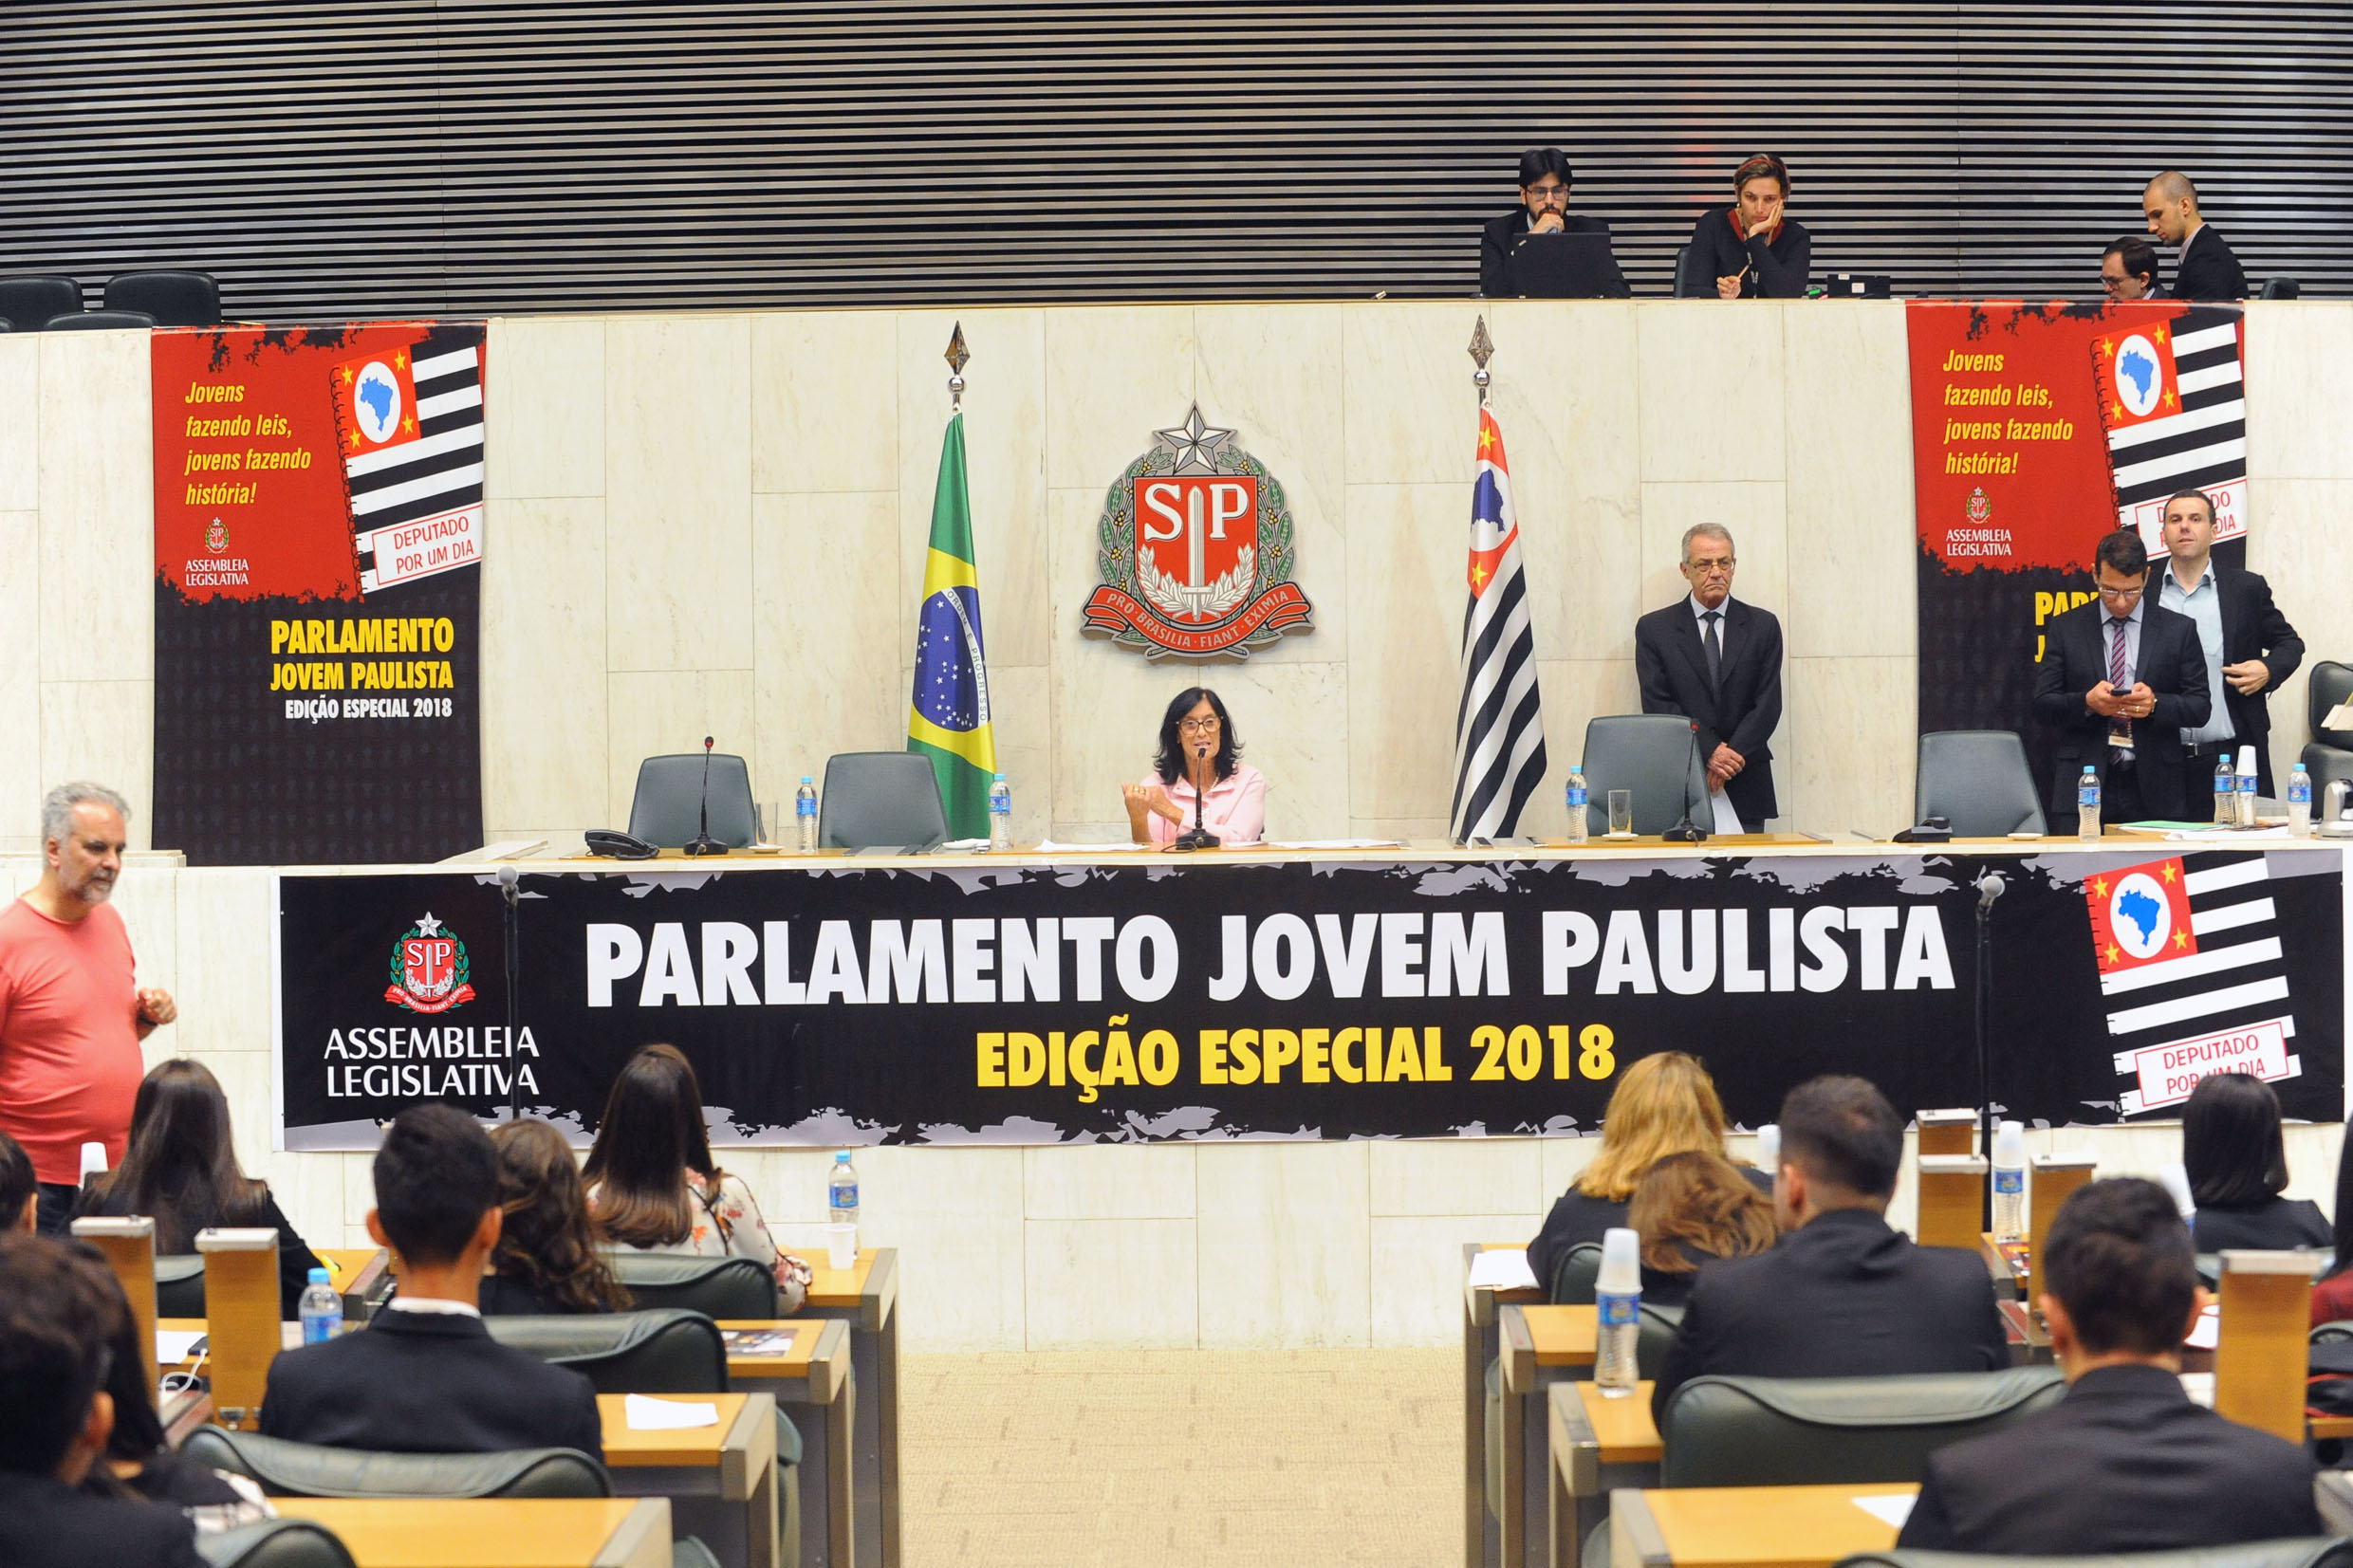 Parlamento Jovem Paulista <a style='float:right;color:#ccc' href='https://www3.al.sp.gov.br/repositorio/noticia/N-04-2018/fg222119.jpg' target=_blank><i class='bi bi-zoom-in'></i> Clique para ver a imagem </a>